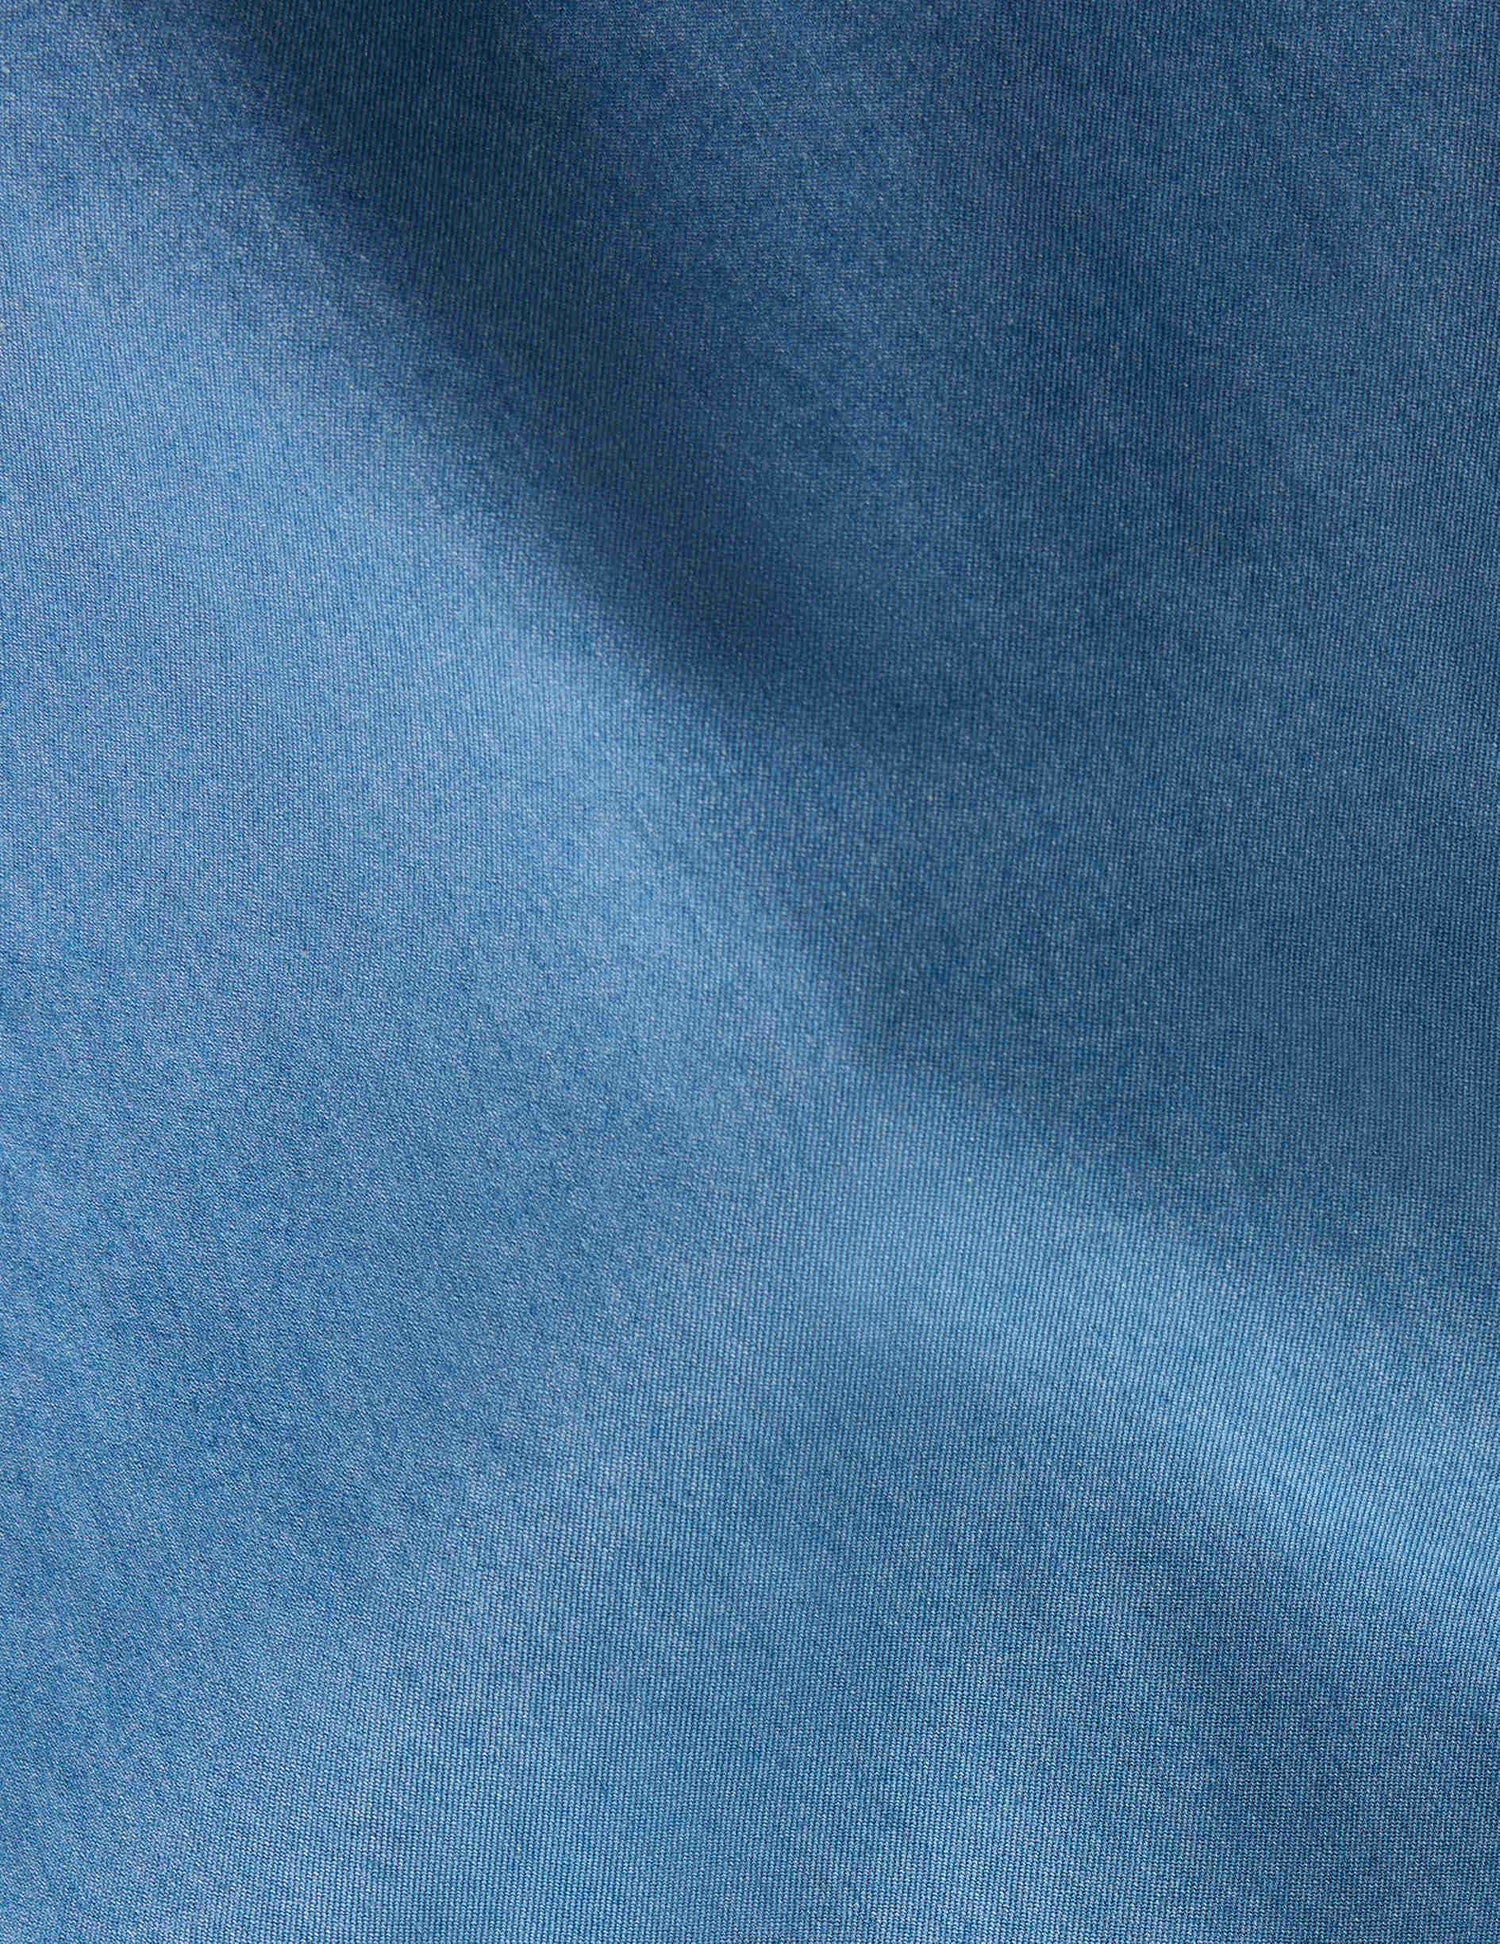 Chemise Semi-ajustée bleue - Twill - Col Américain#5